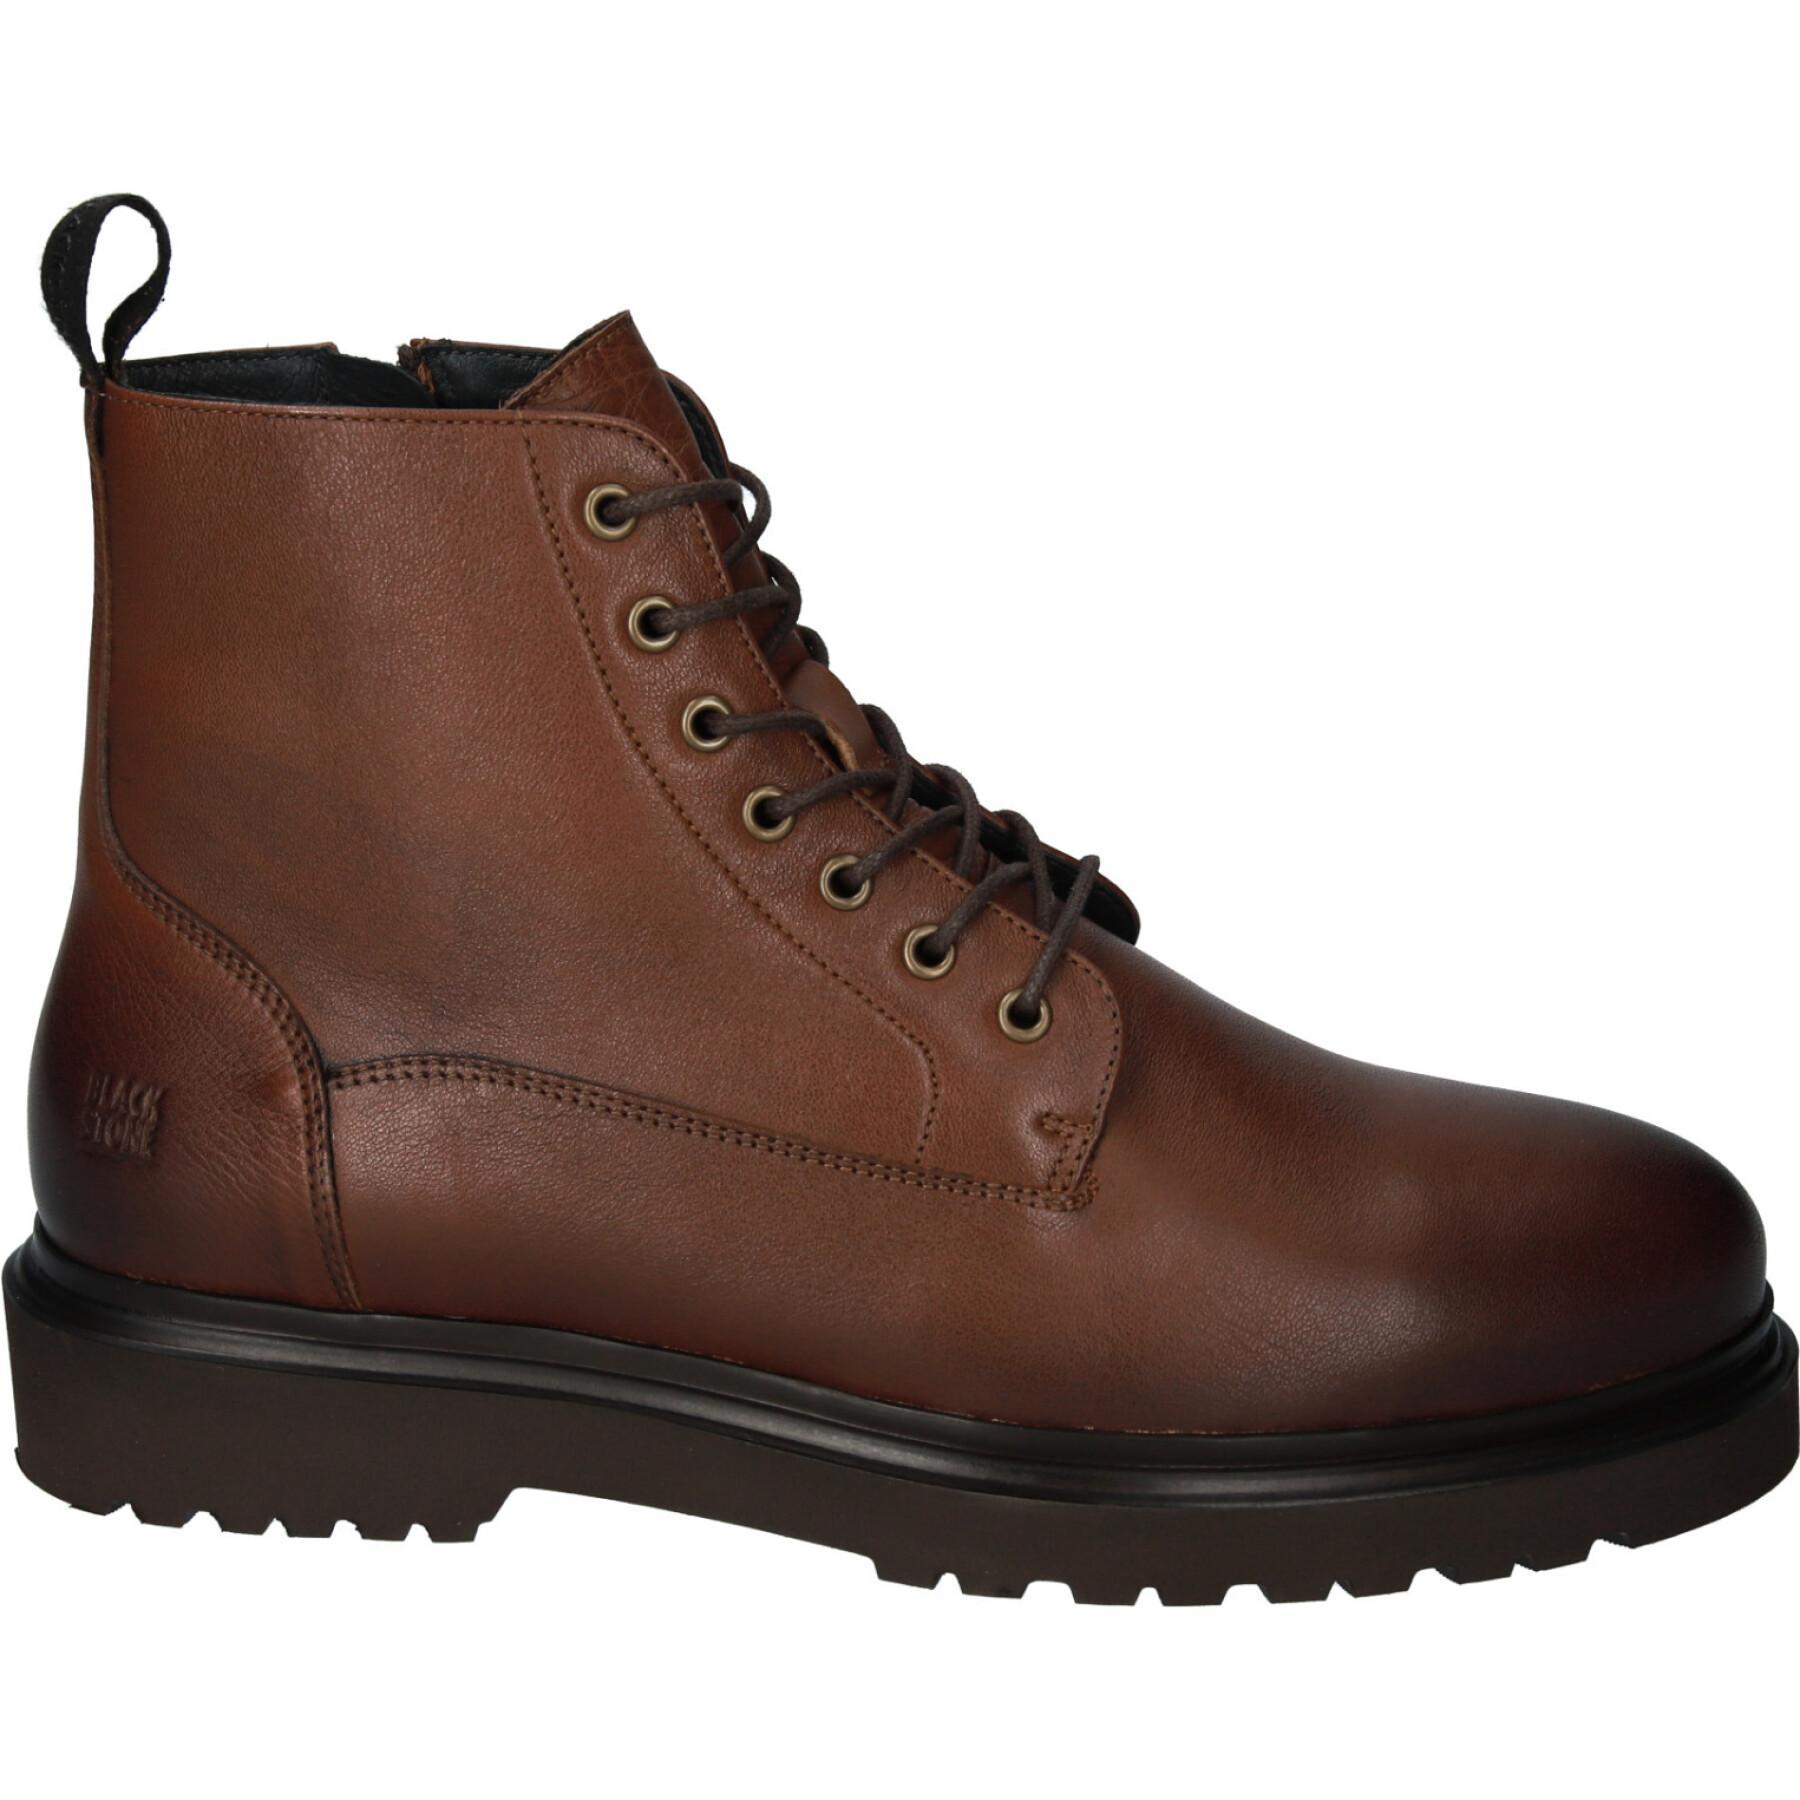 Zipper boots Blackstone Brody - YG33